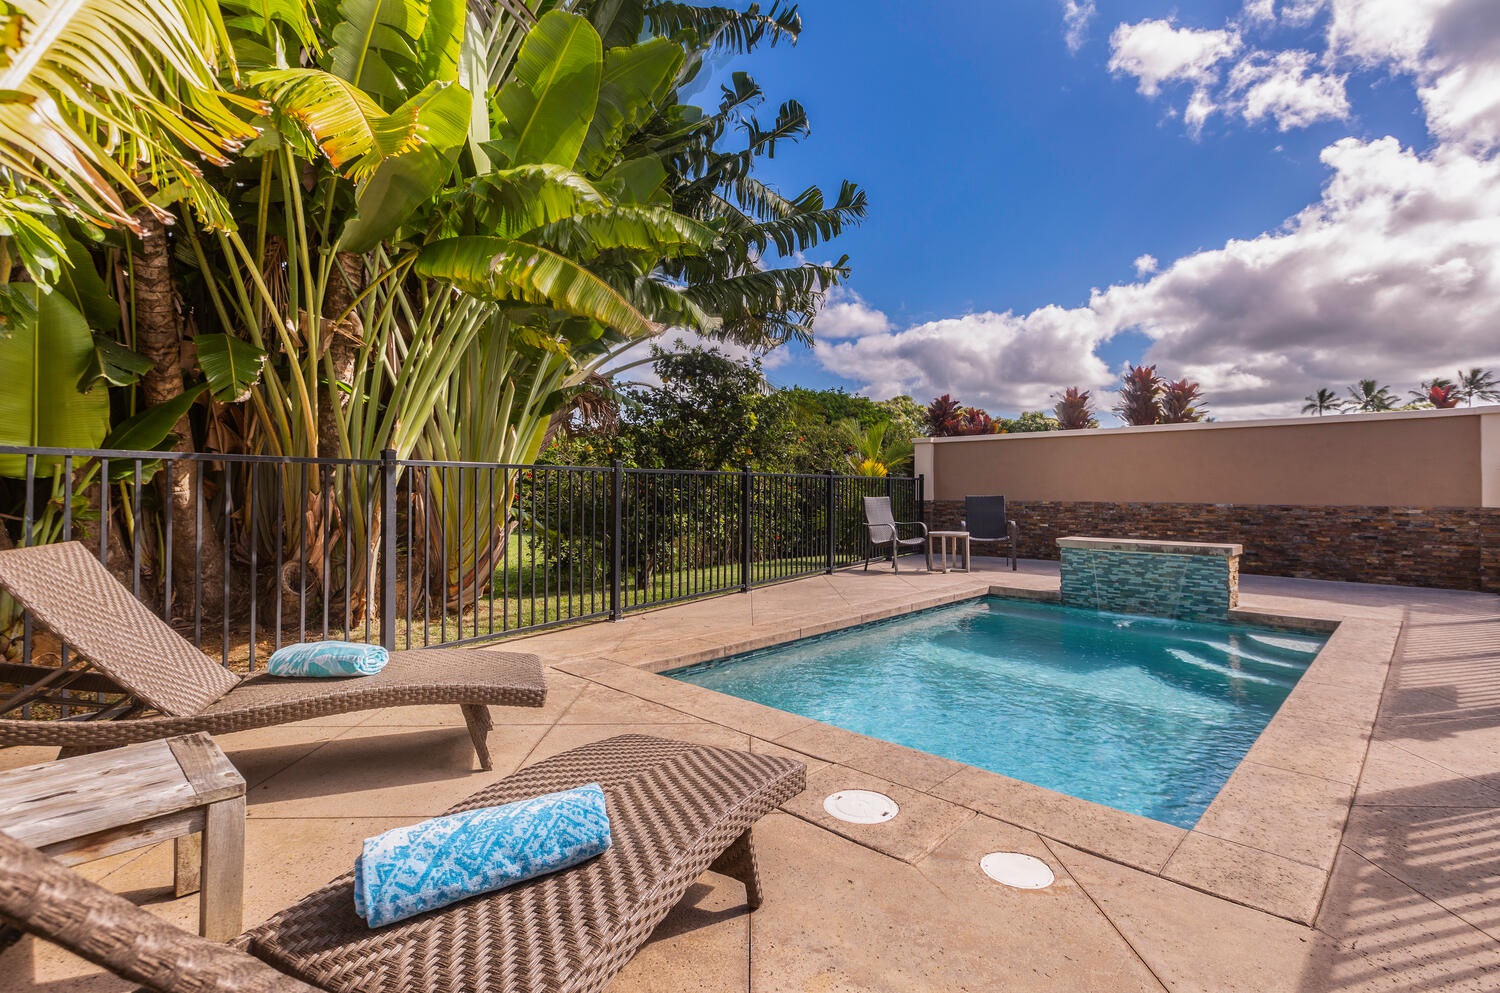 Princeville Vacation Rentals, Pohaku Villa - We bring you the perfect relaxation